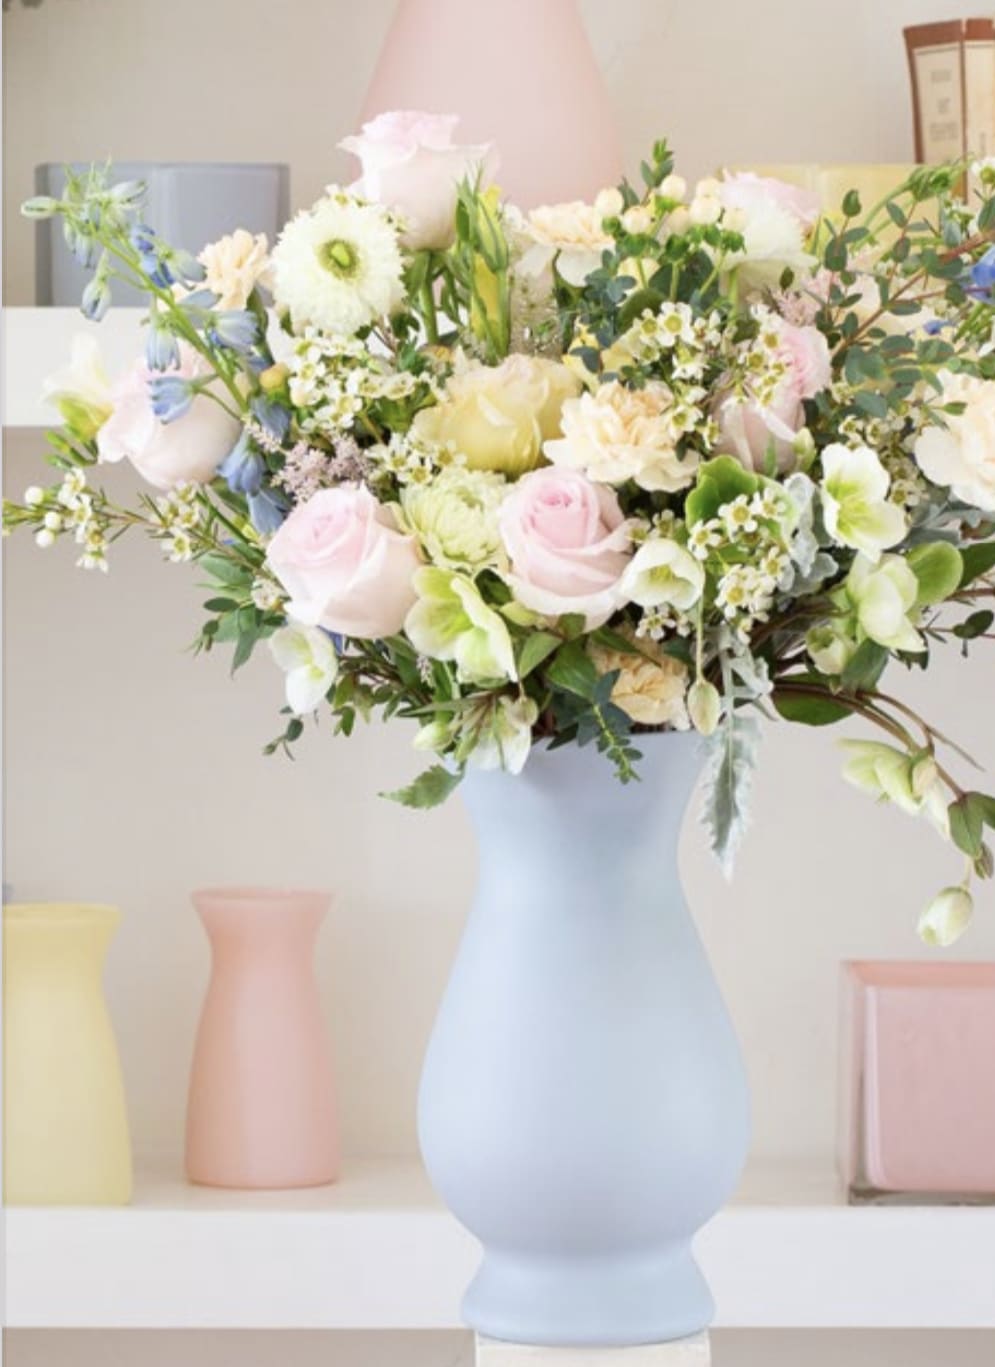 This fantastic arrangement arrives in a clear bella vase full of soft